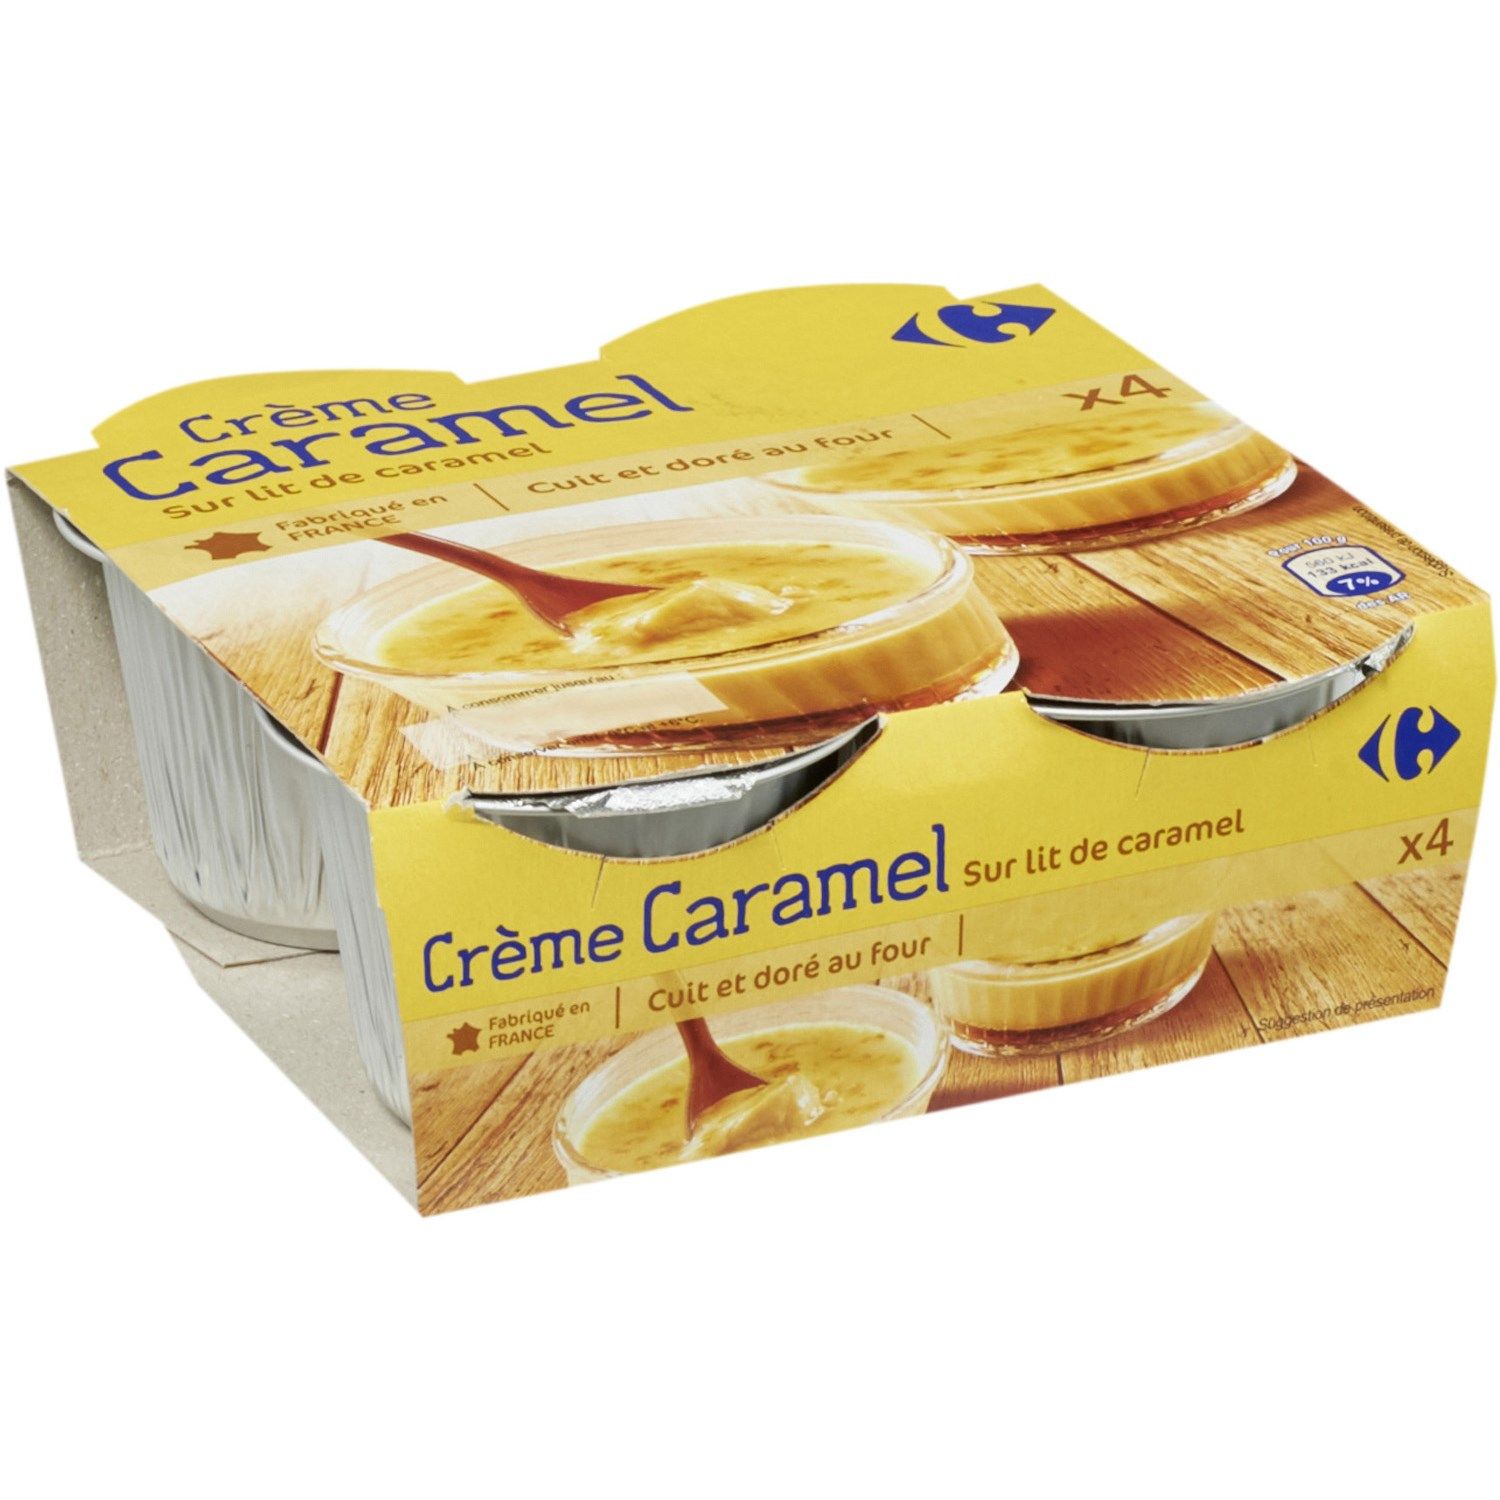 stm>Cream Caramel, Carrefour 4x125gr